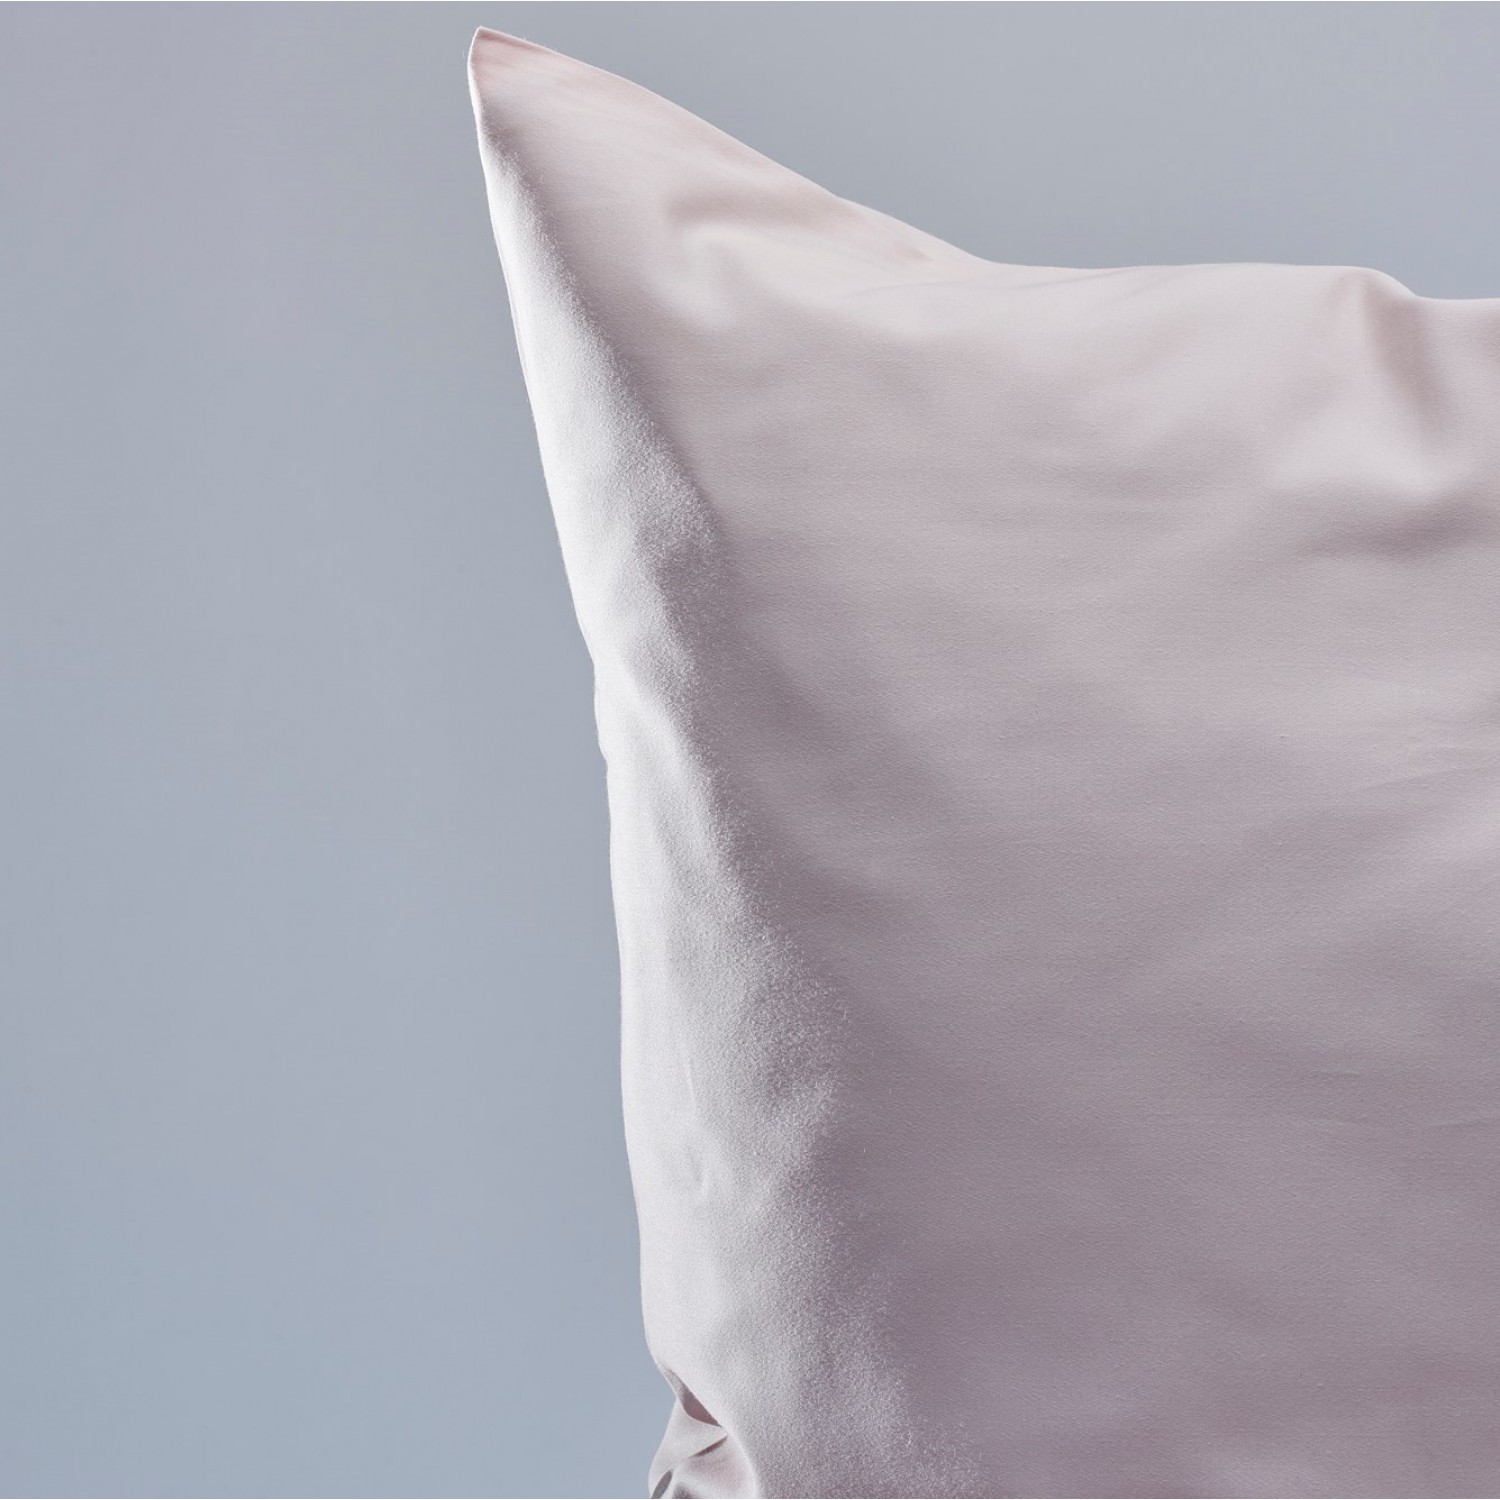 100% Egyptian long-staple cotton olive green pillowcase 2 piece pillow case